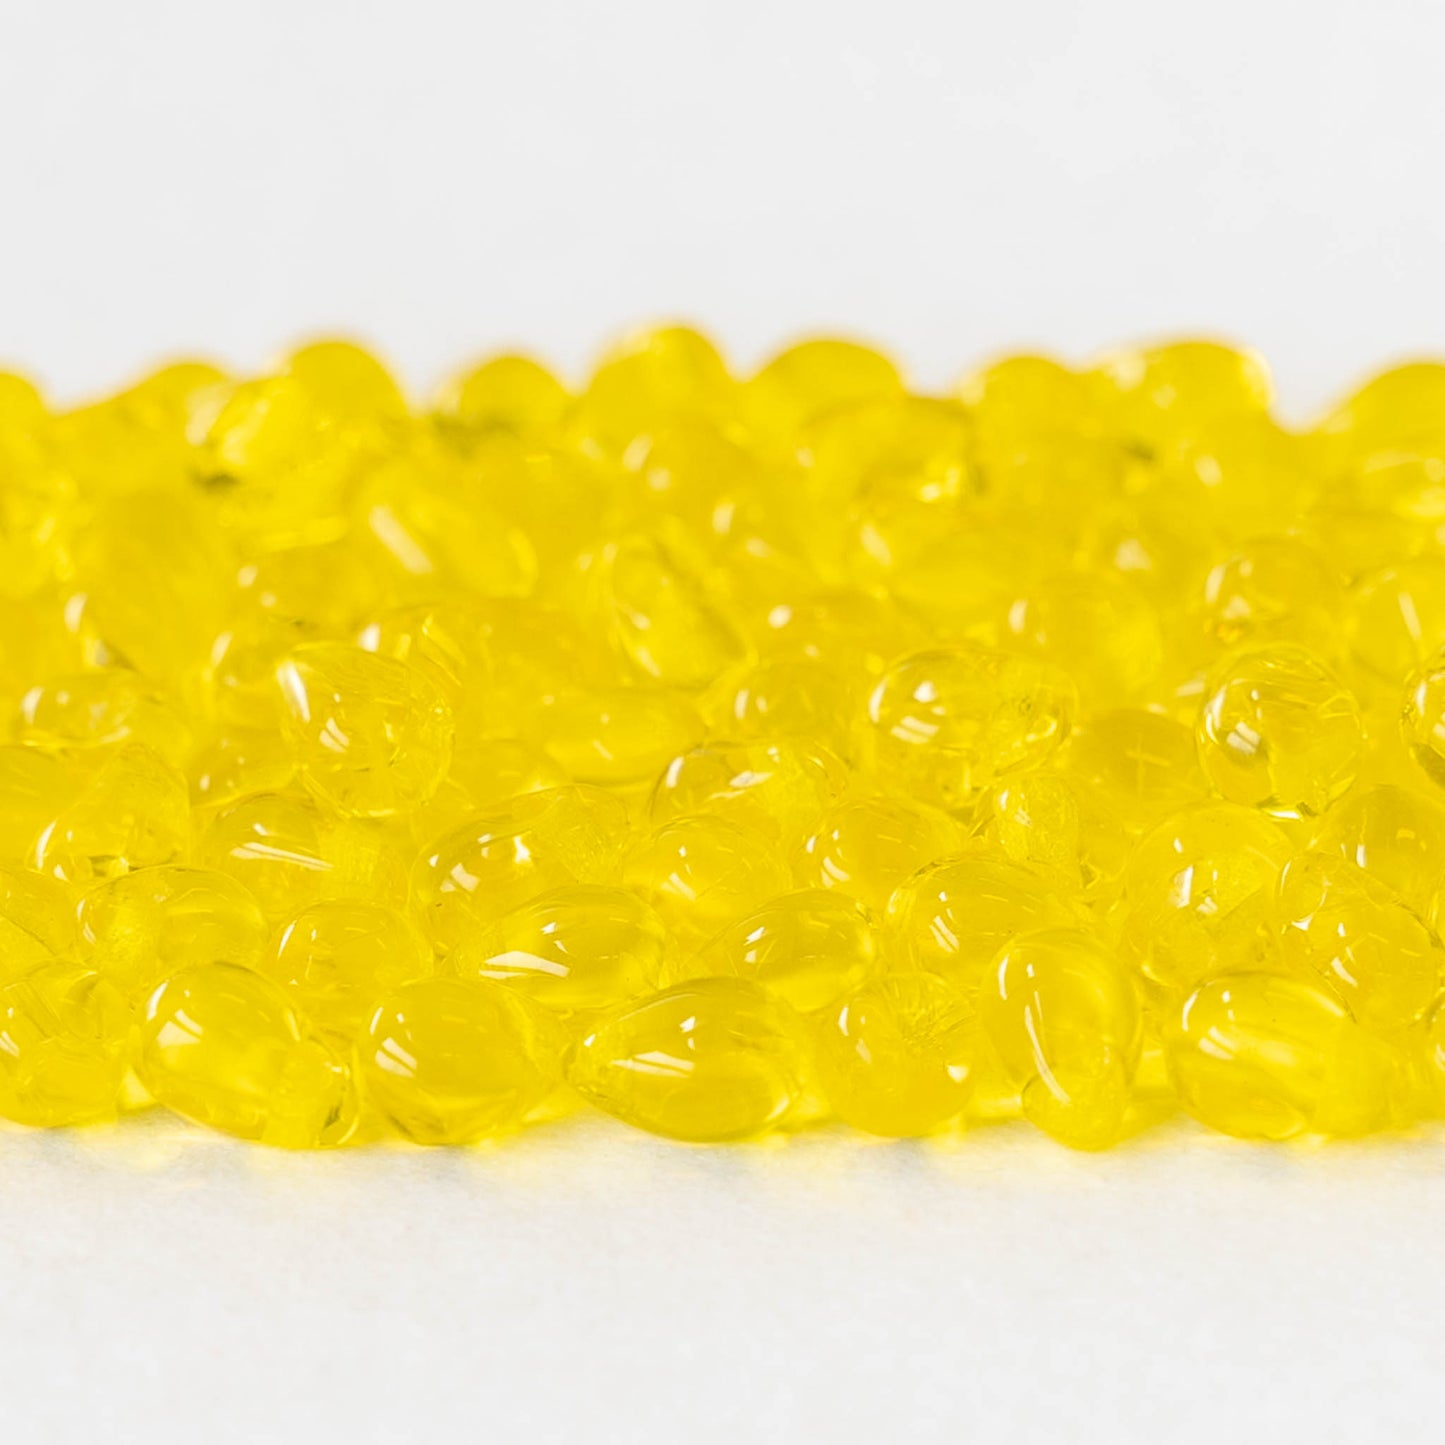 4x6mm Glass Teardrop Beads - Very Yellow - 100 Beads